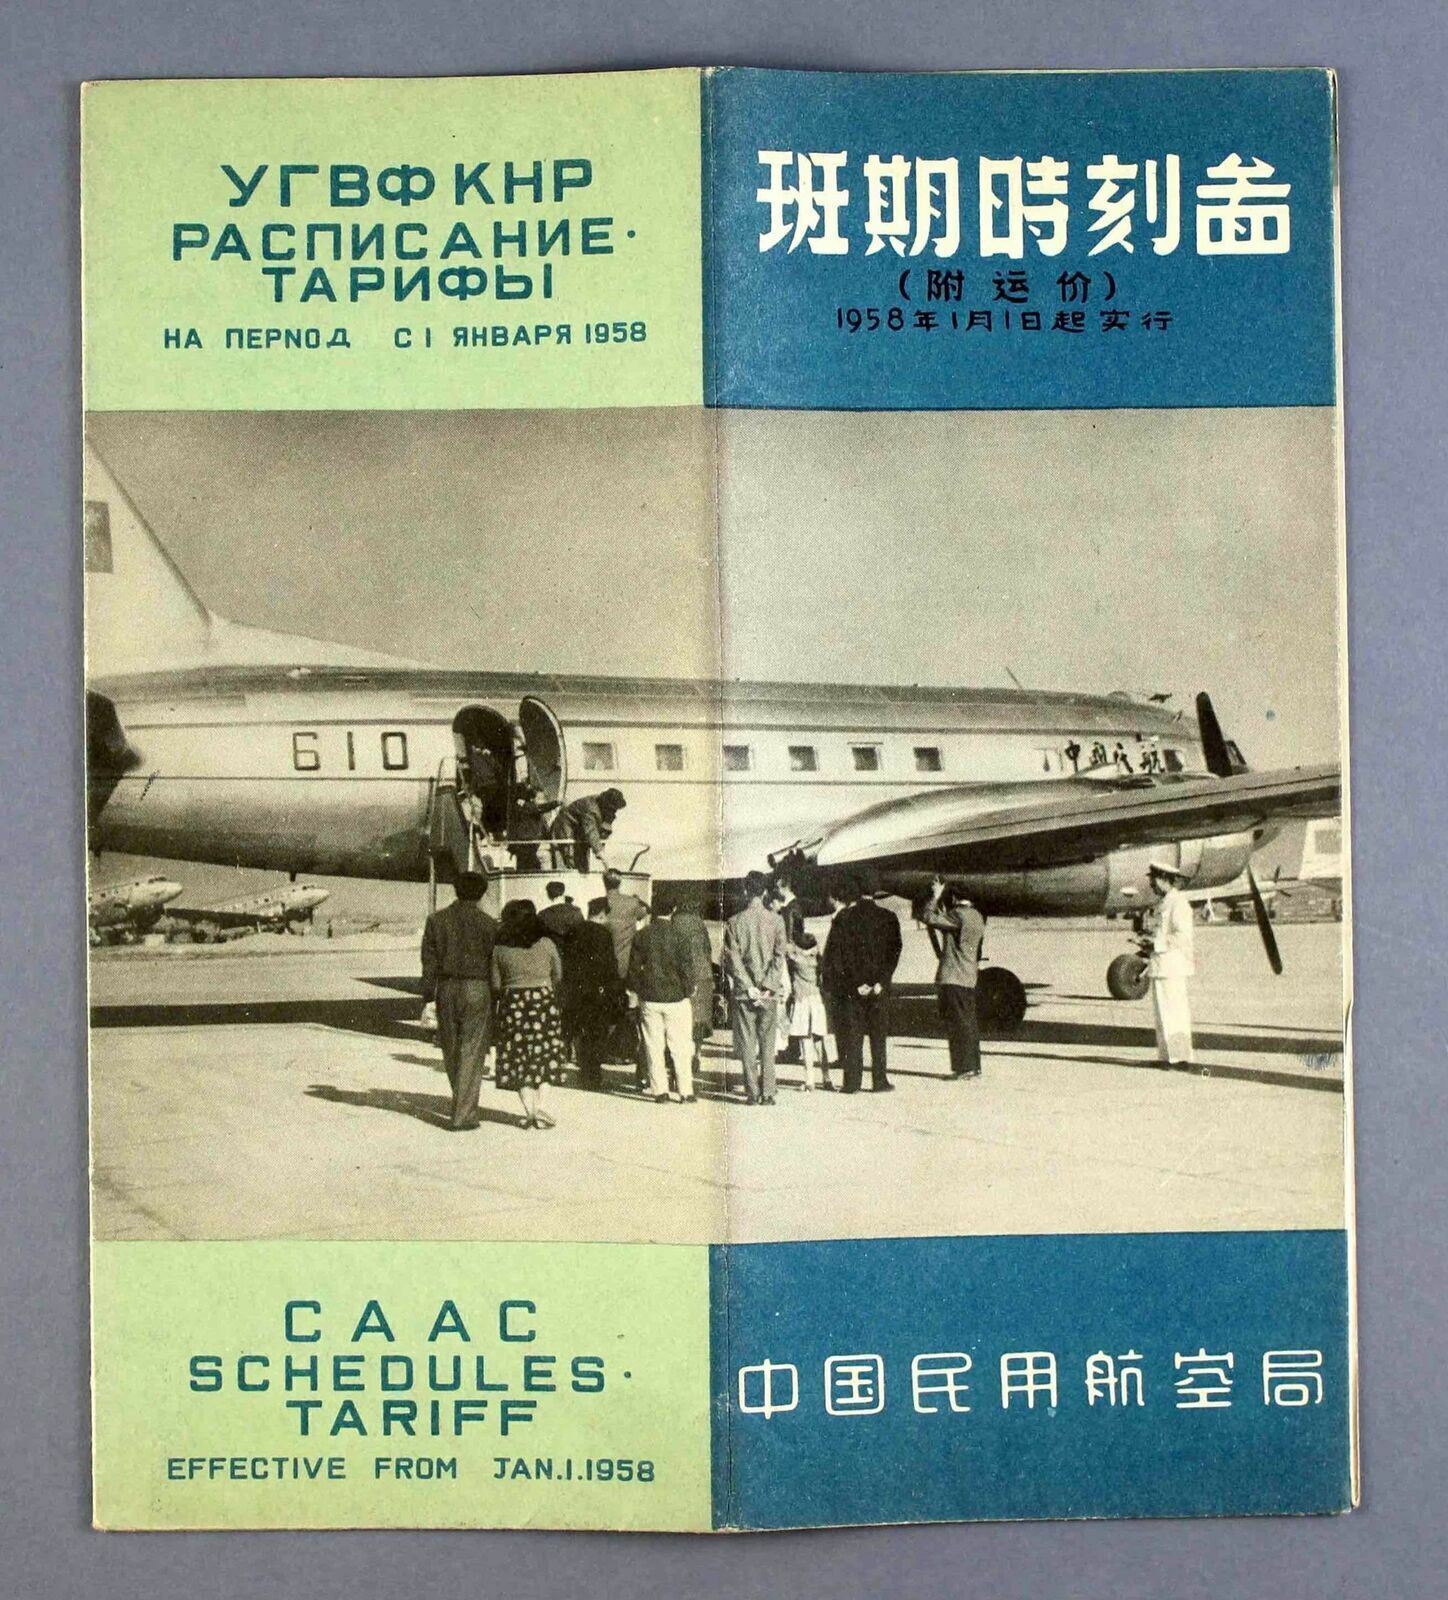 CAAC AIRLNE TIMETABLE JANUARY 1958 CIVIL AVIATION ADMINISTRATION OF CHINA